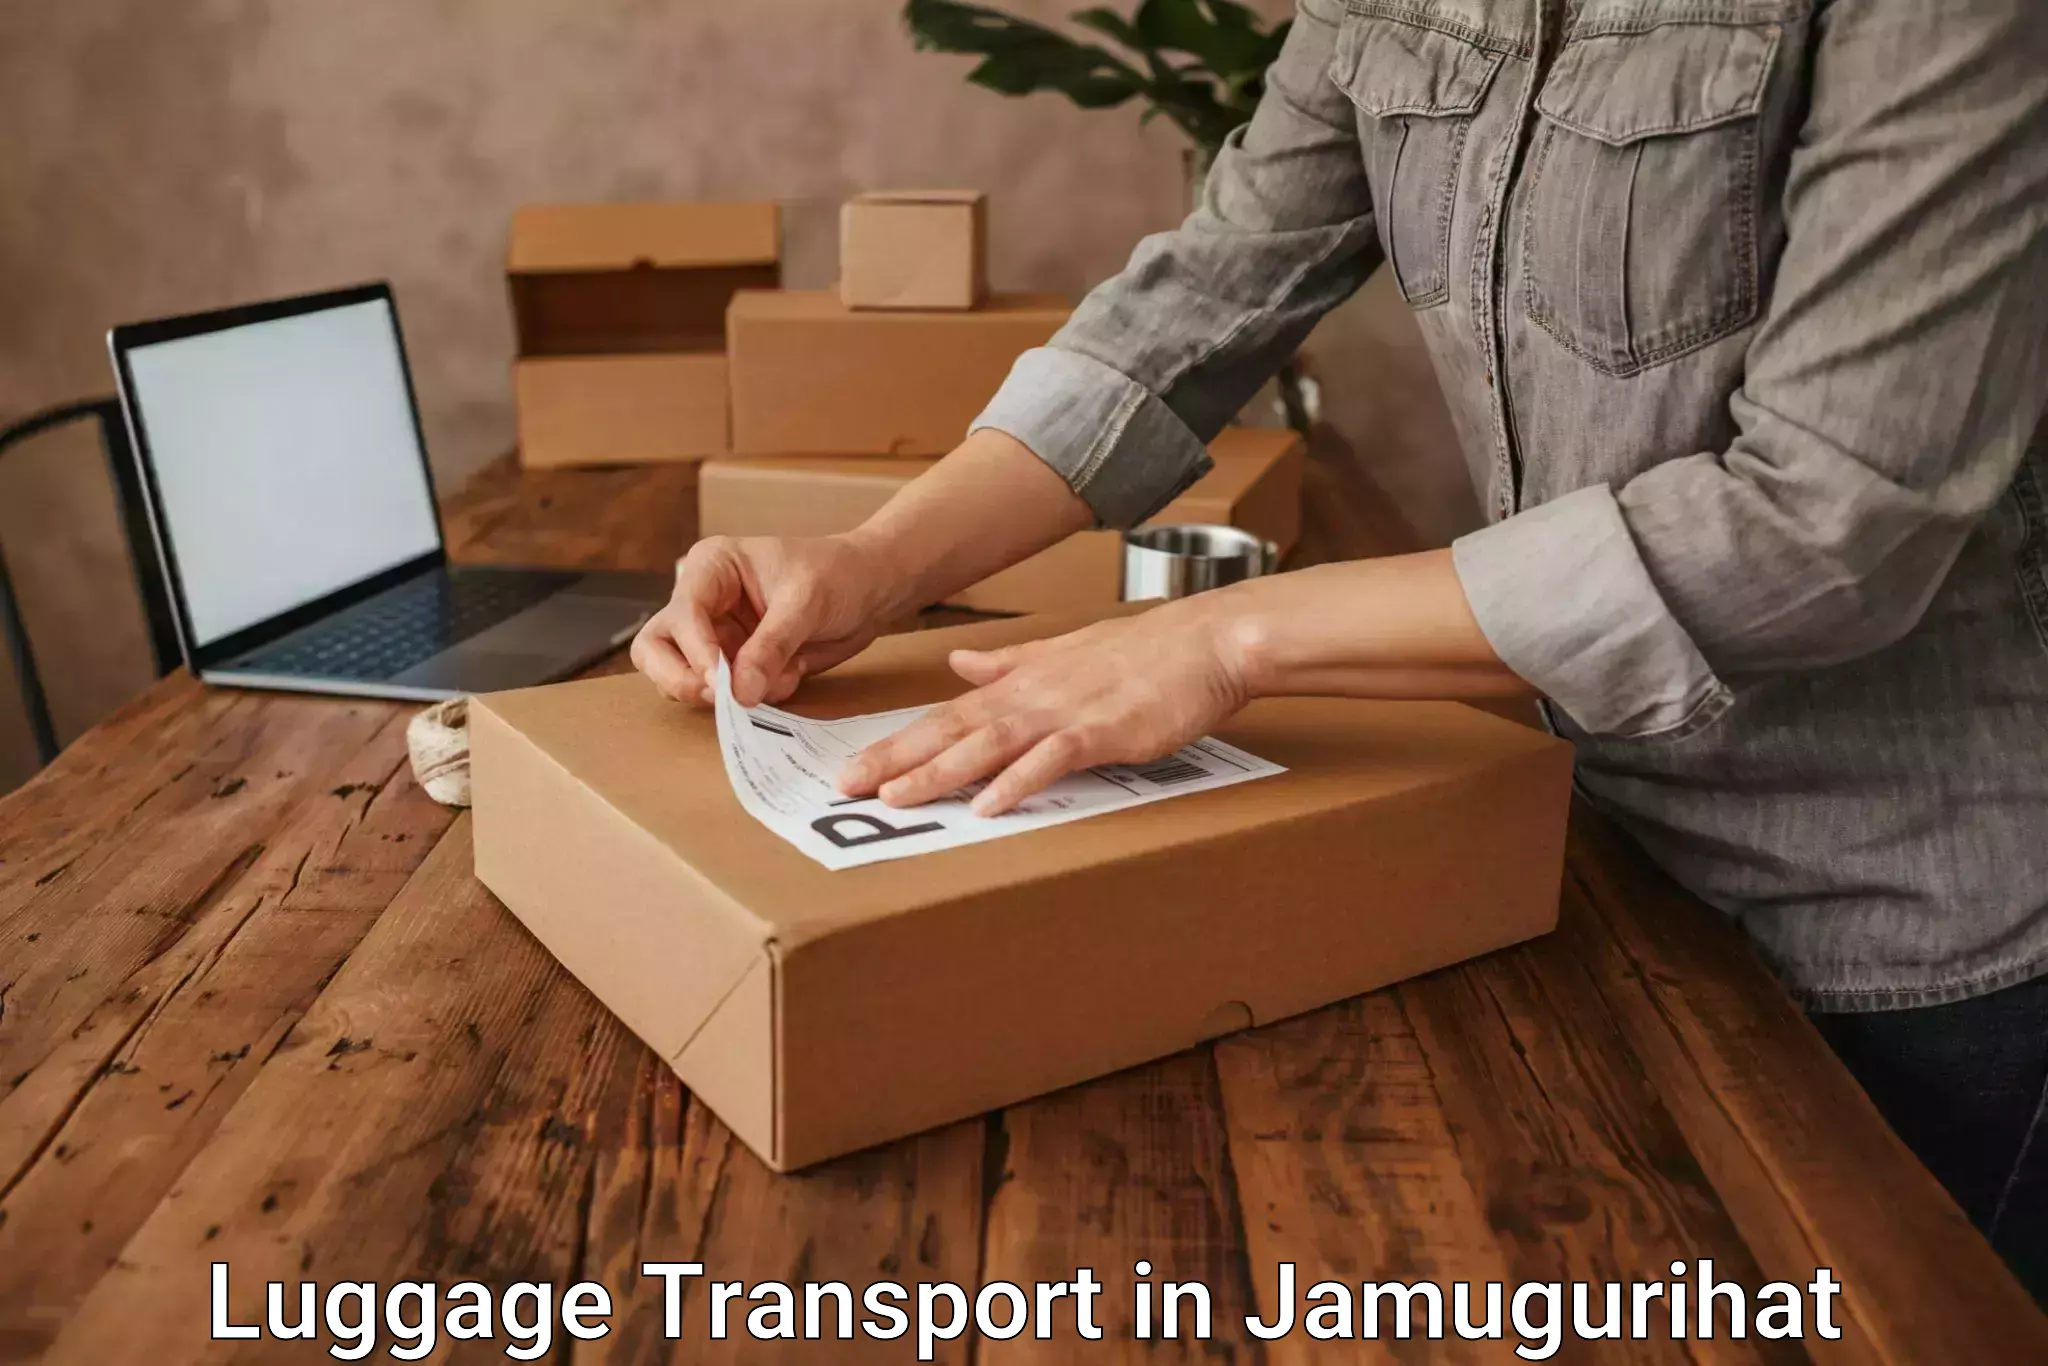 Luggage shipment tracking in Jamugurihat